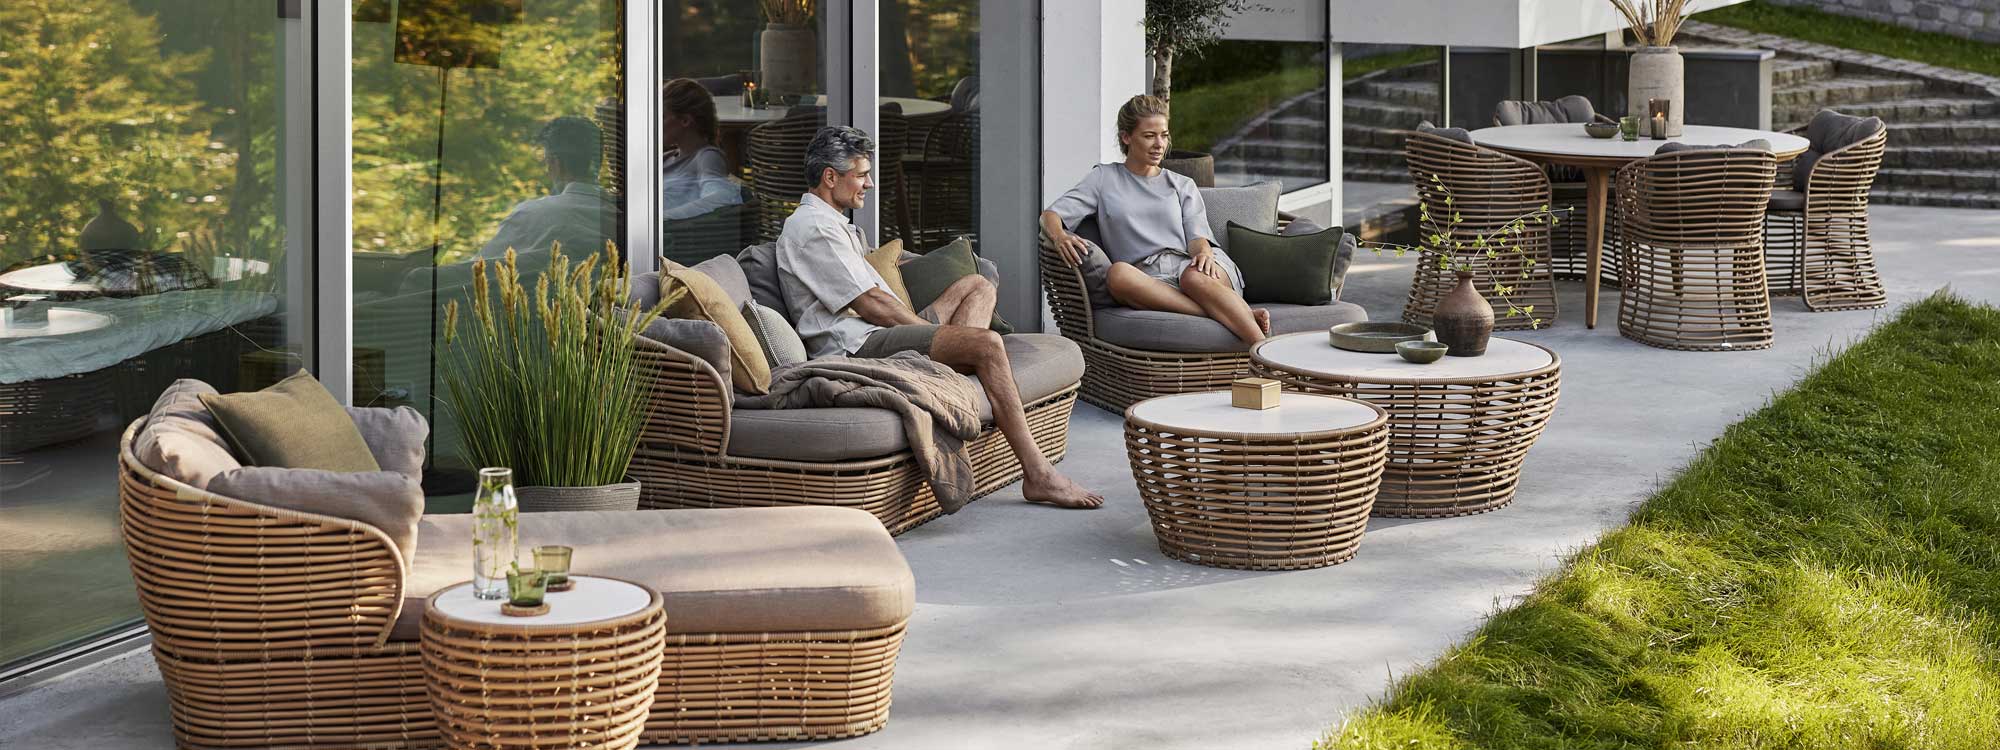 Basket cane garden sofa is modern outdoor lounge furniture in high quality garden furniture materials by Cane-line designer rattan furniture